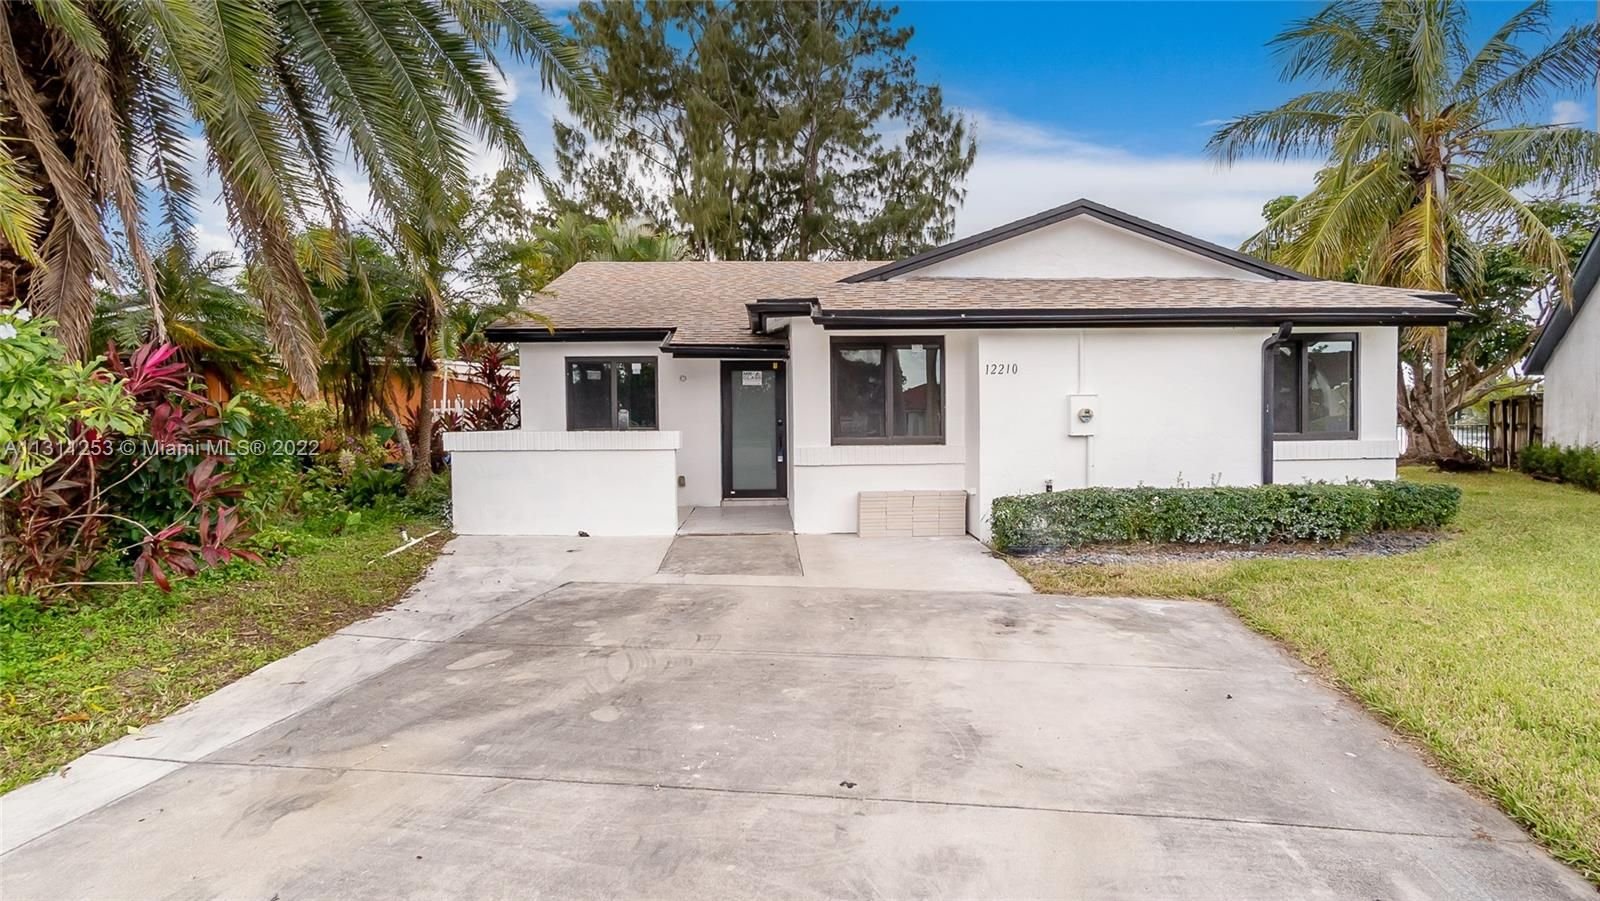 Real estate property located at 12210 194th Ter, Miami-Dade County, Miami, FL